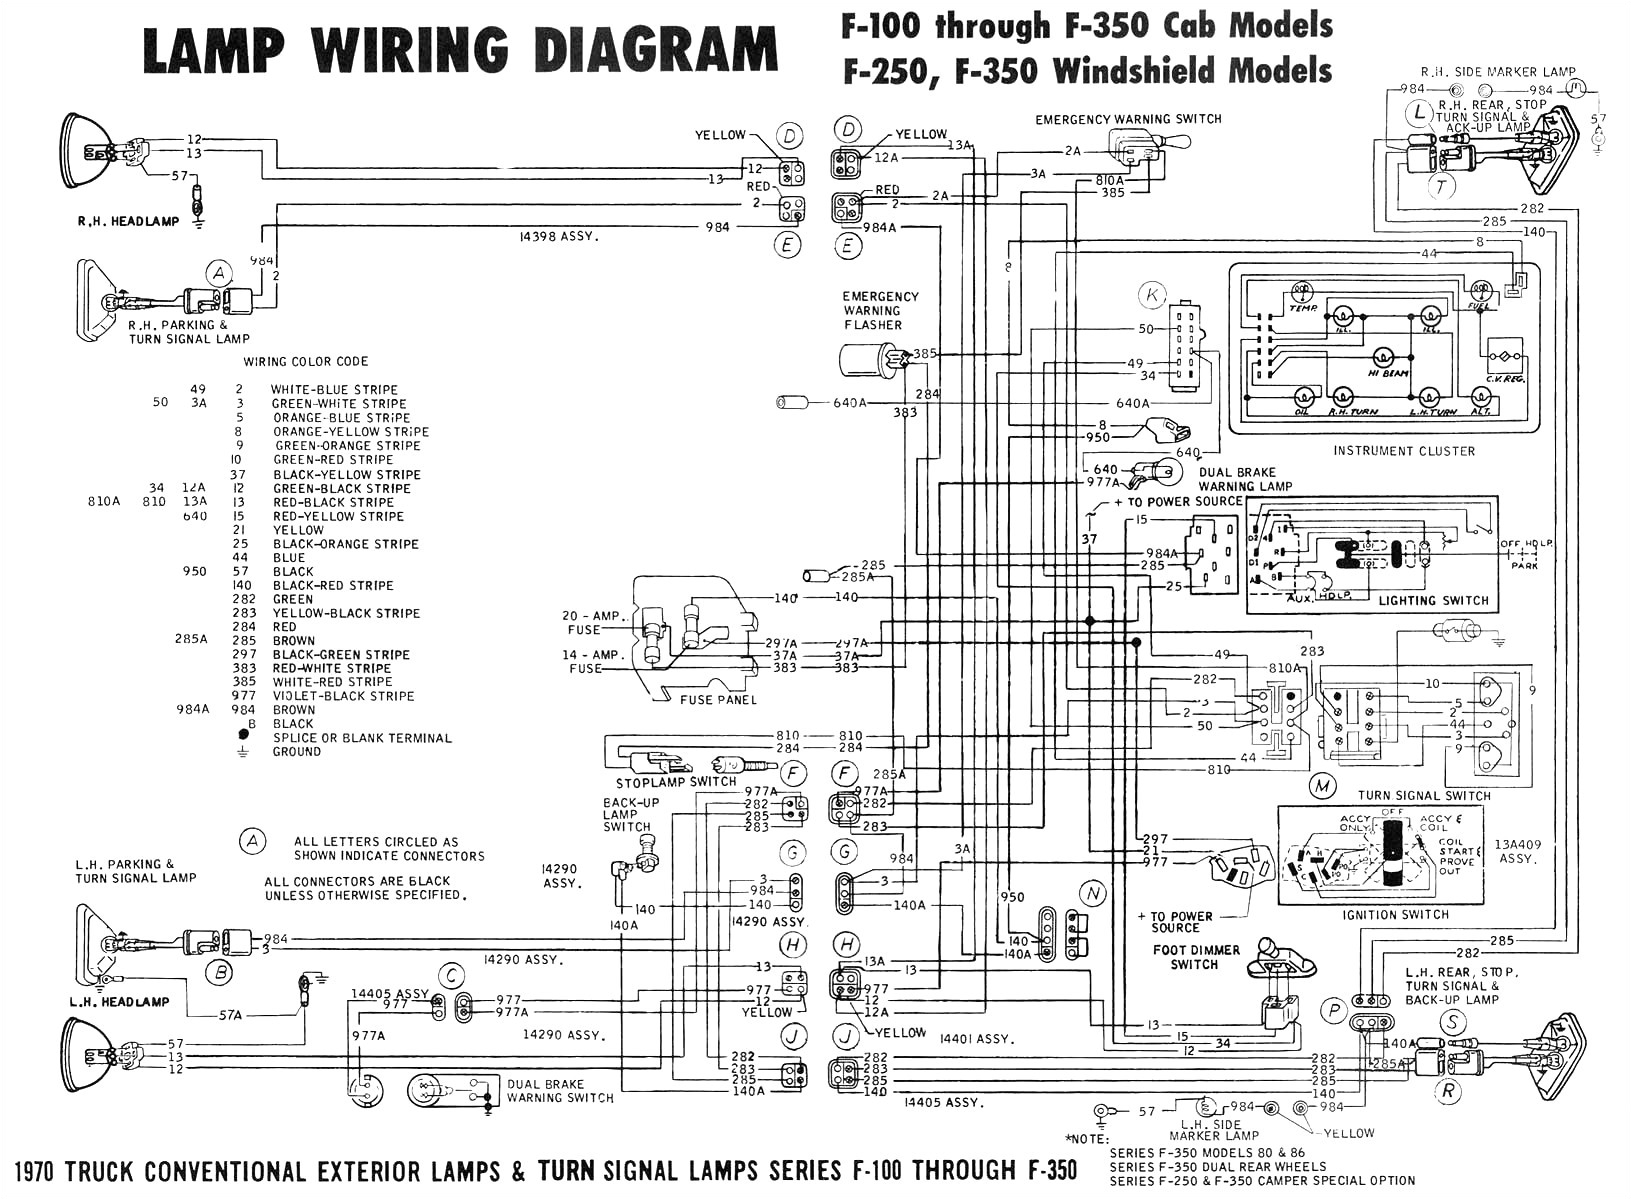 raymond wiring diagram book diagram schema raymond reach truck wiring diagram